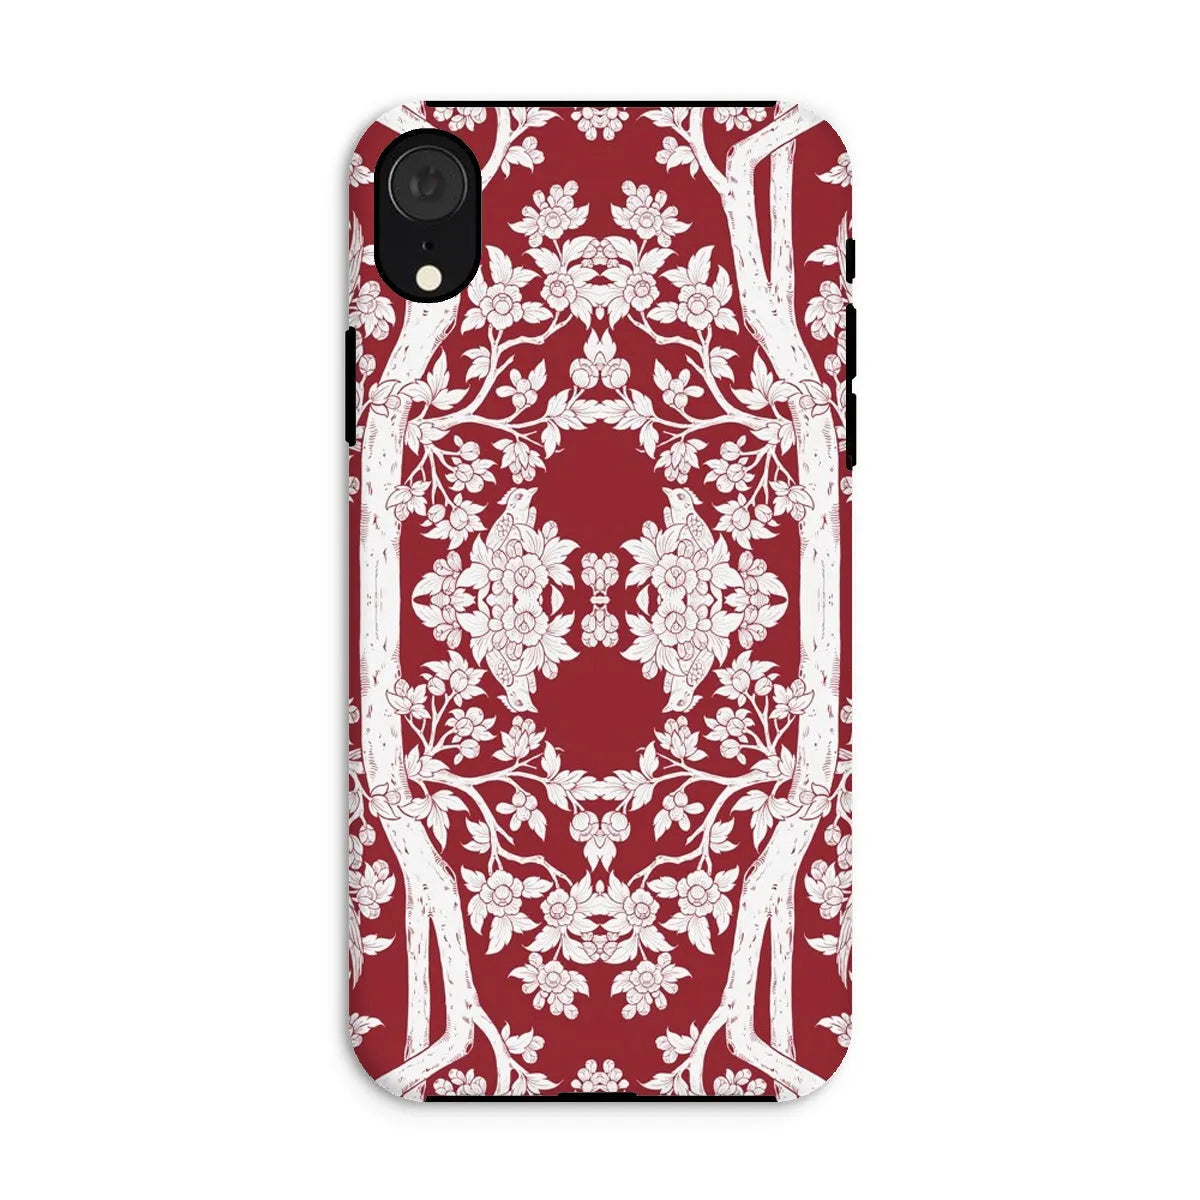 Aviary Red Aesthetic Pattern Art Phone Case - Iphone Xr / Matte - Mobile Phone Cases - Aesthetic Art